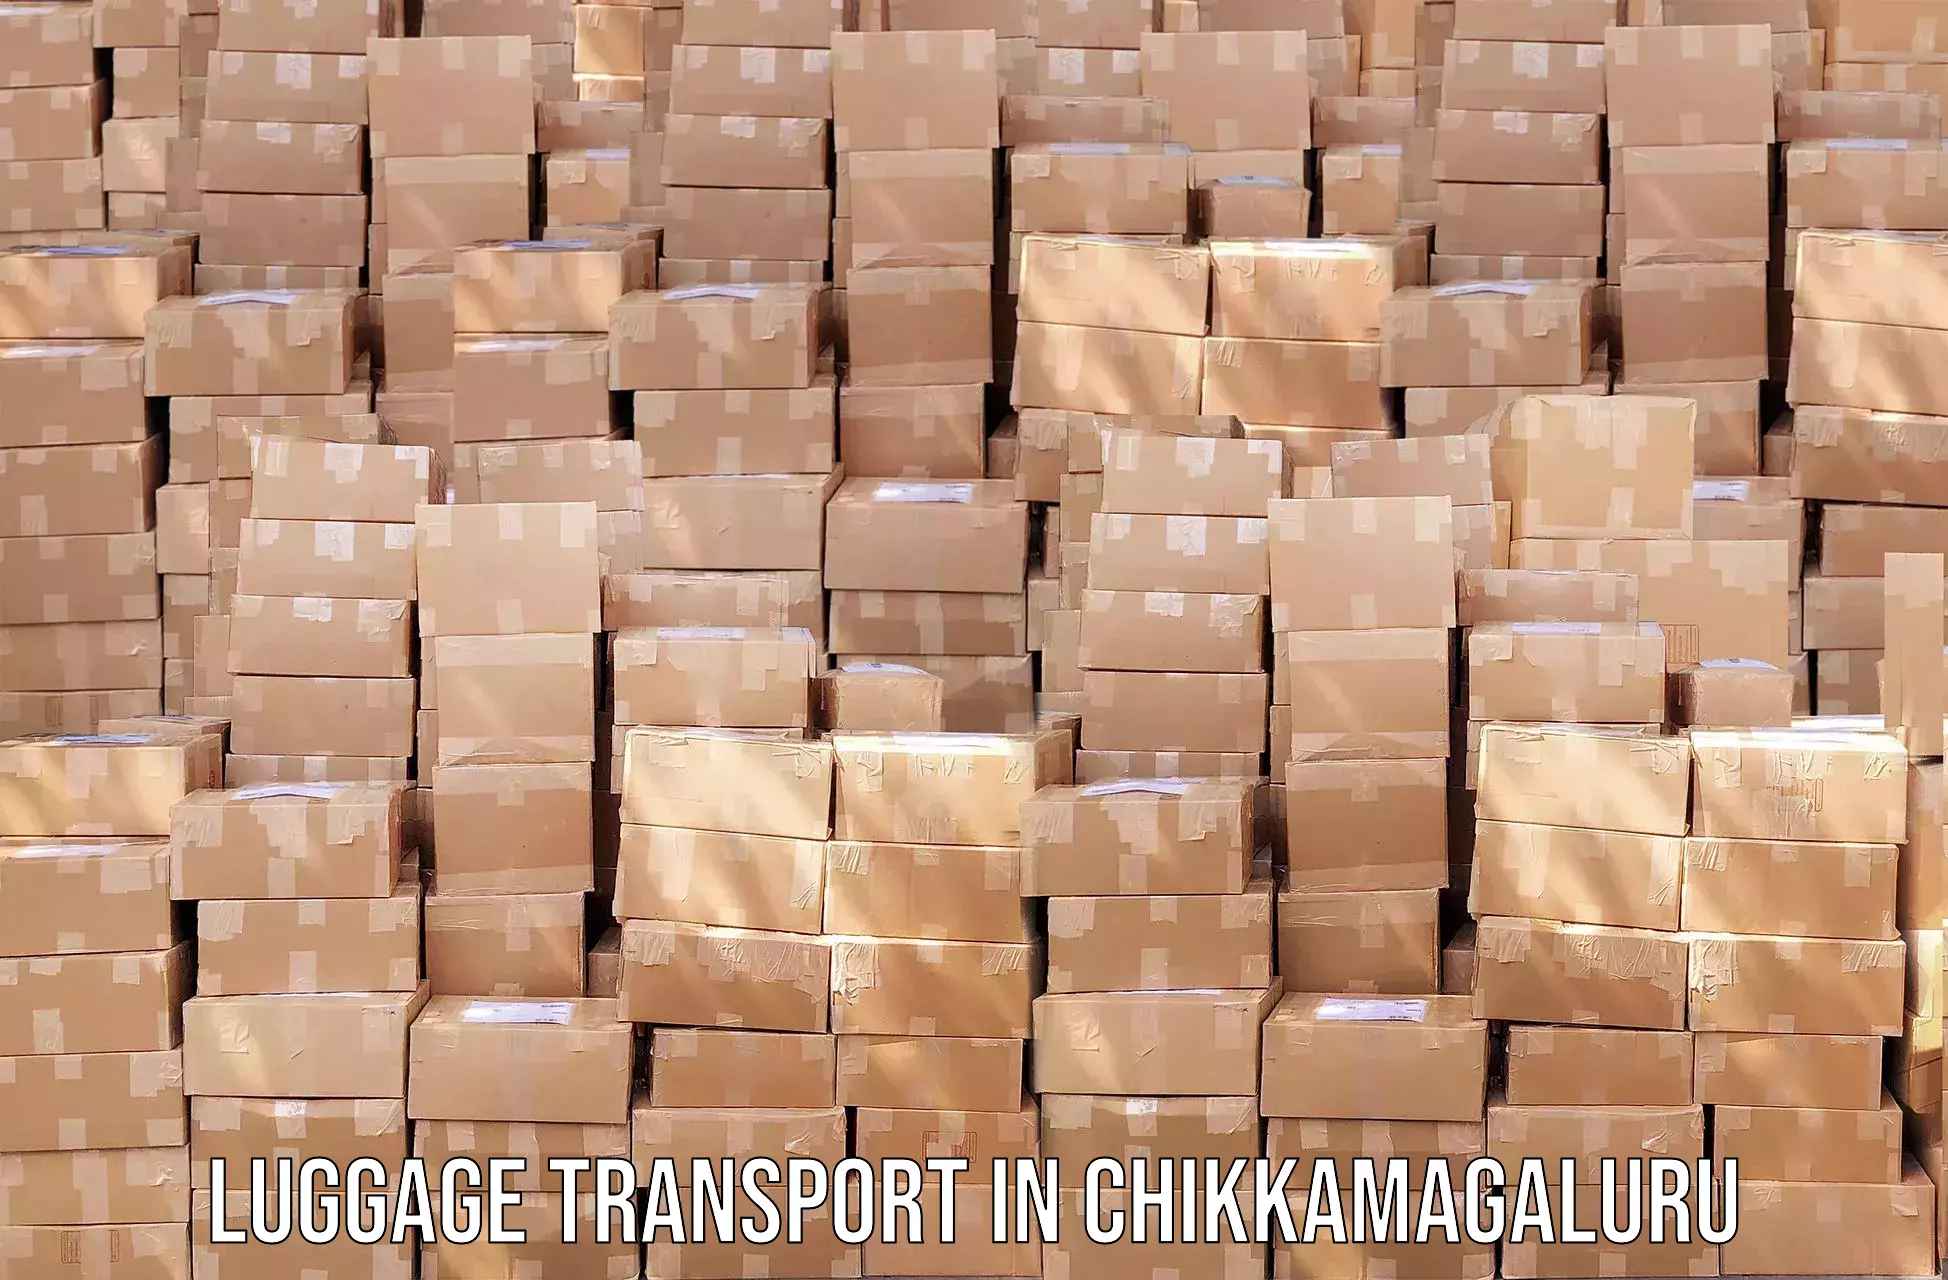 Luggage transit service in Chikkamagaluru